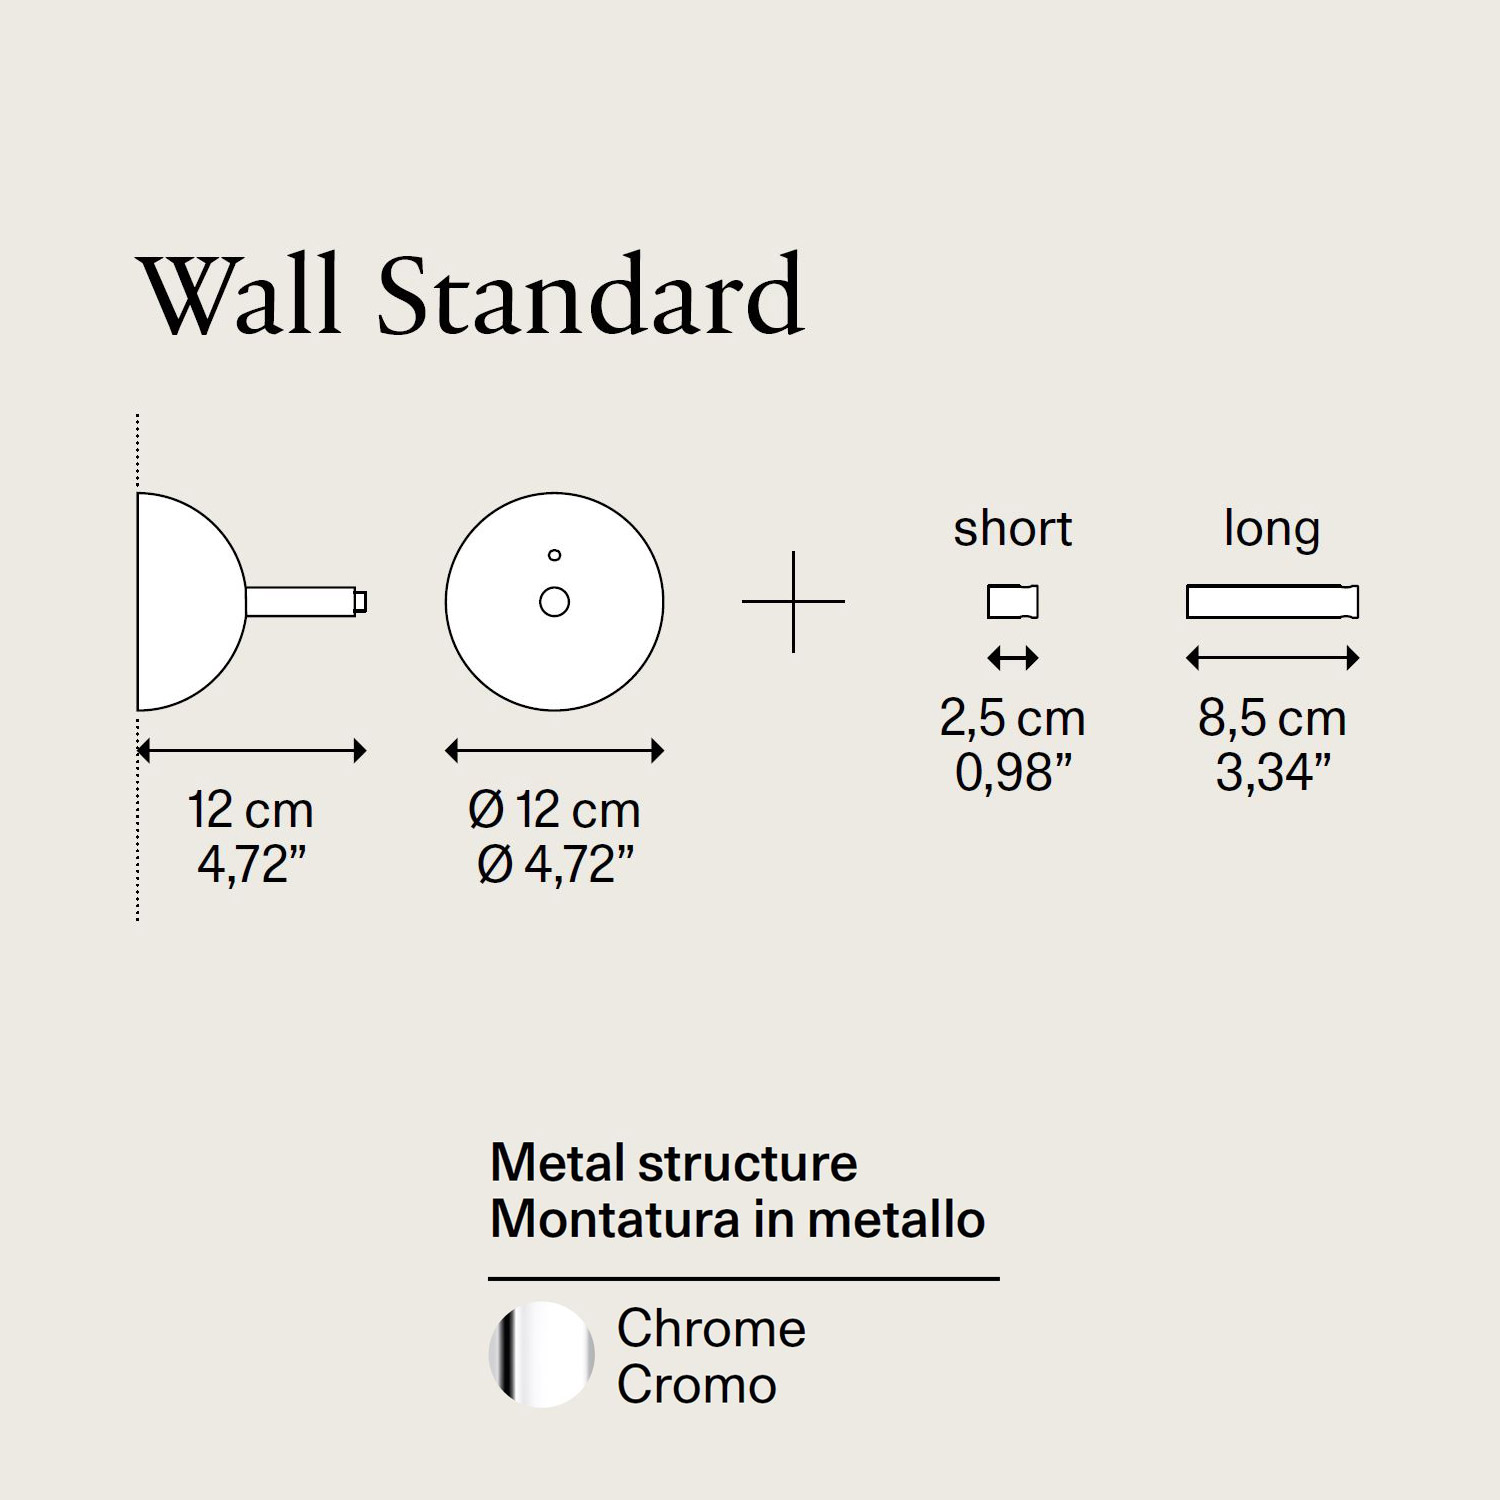 Wall Standard bracket by Lodes